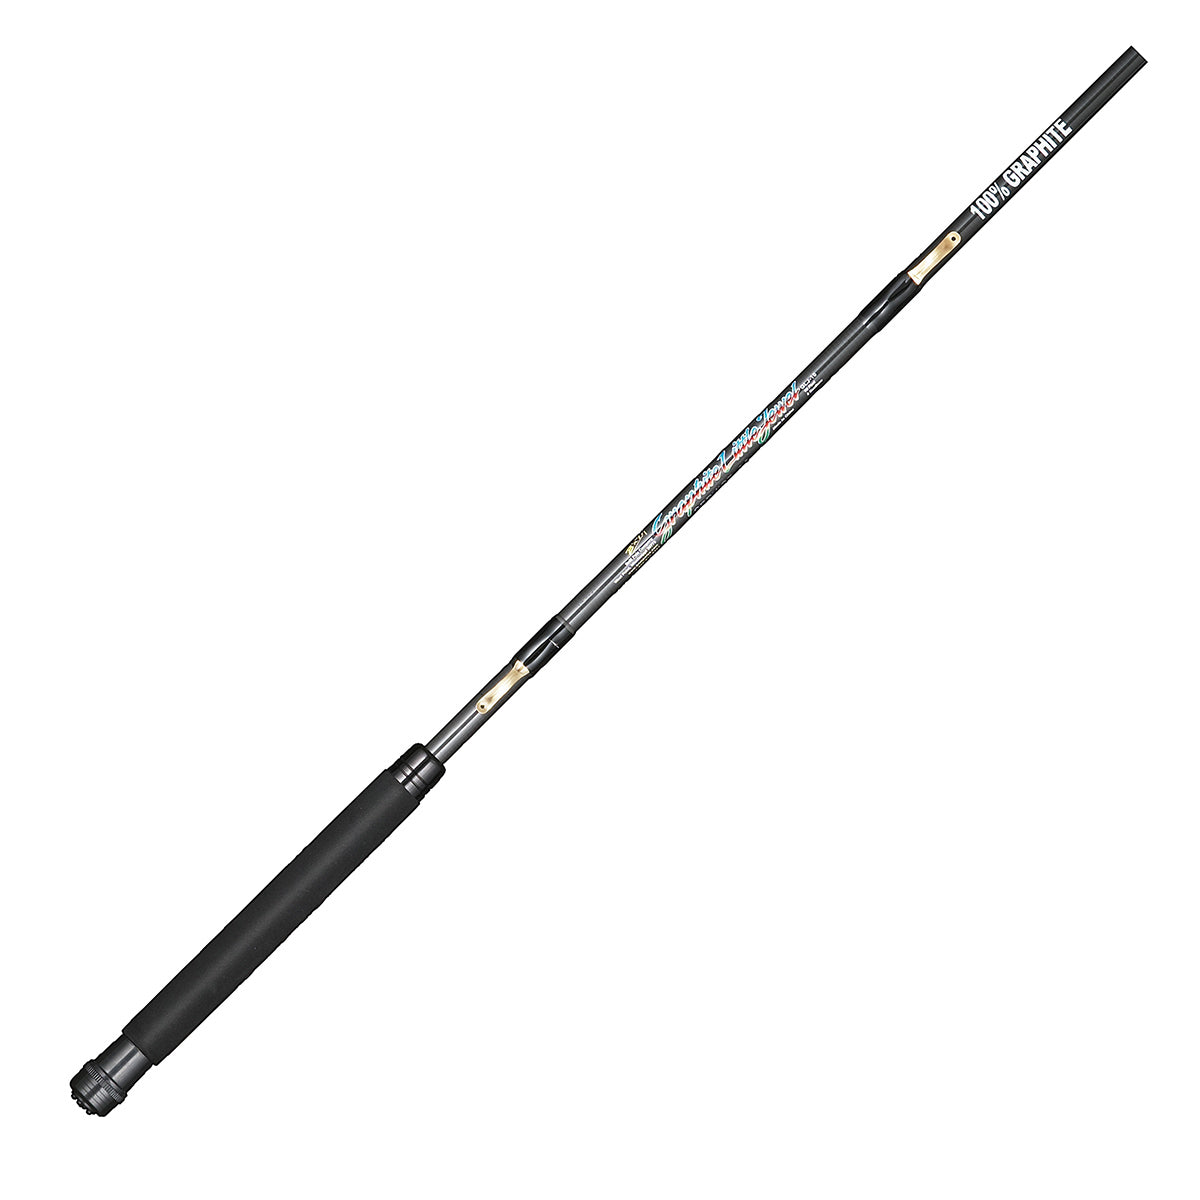  BnM Poles Bucks Best Ultralight Crappie and Panfish Reel,Black,  BAN01 : General Sporting Equipment : Sports & Outdoors